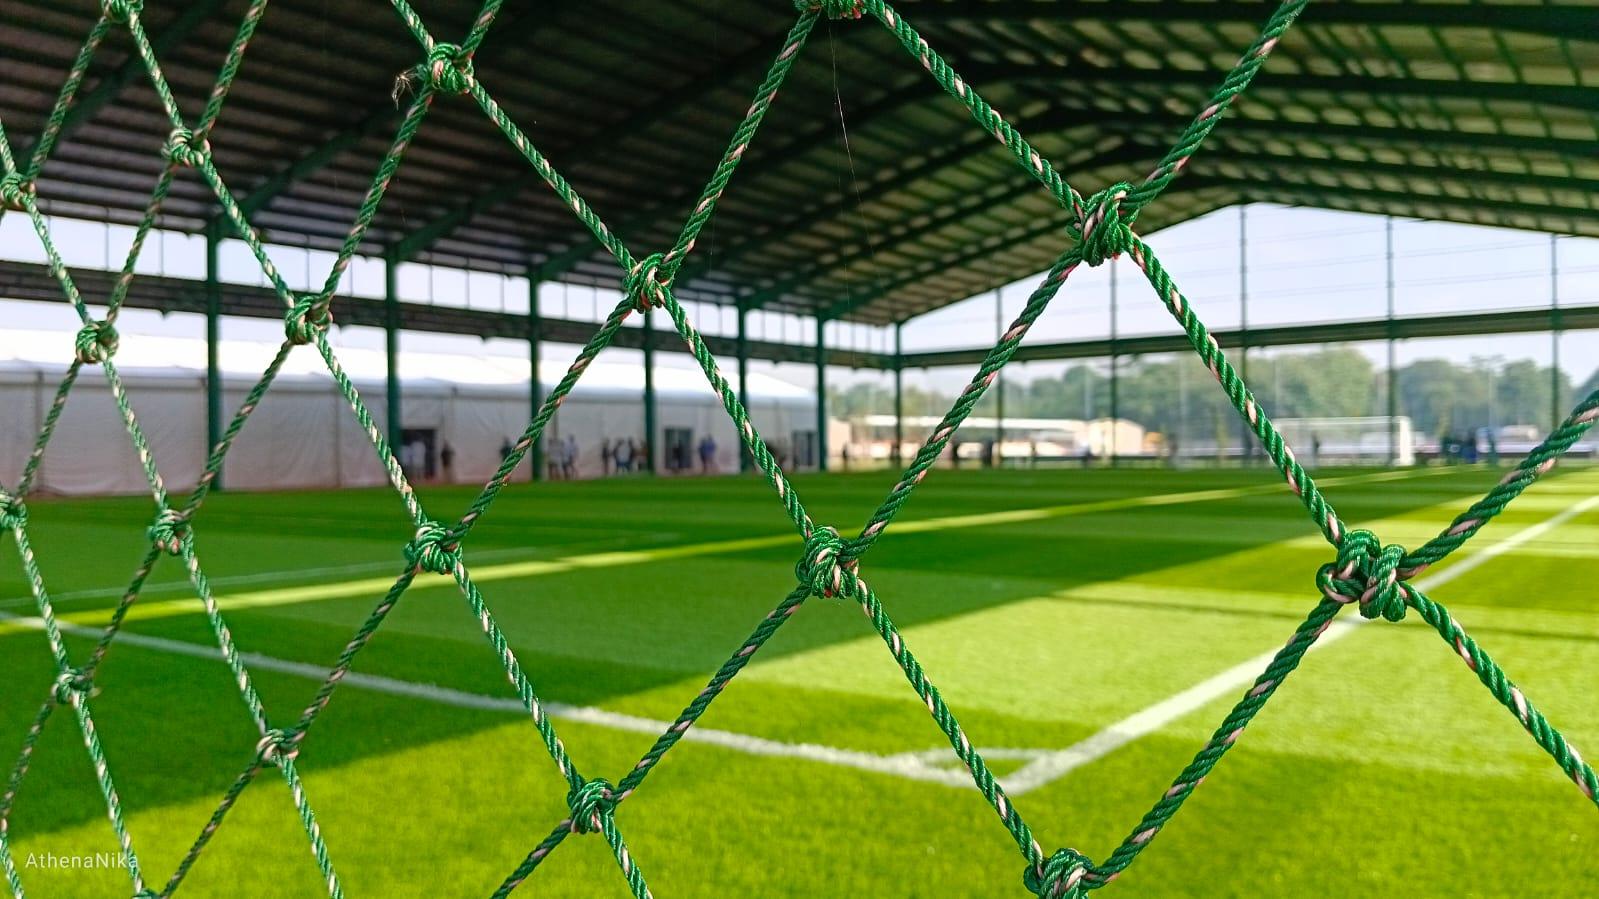 Selain dua lapangan utama, Kompleks Garudayaksa FA dilengkapi satu lapangan indoor dengan rumput sintetis sebagai alternatif latihan ketika cuaca sedang tidak mendukung alias hujan deras.